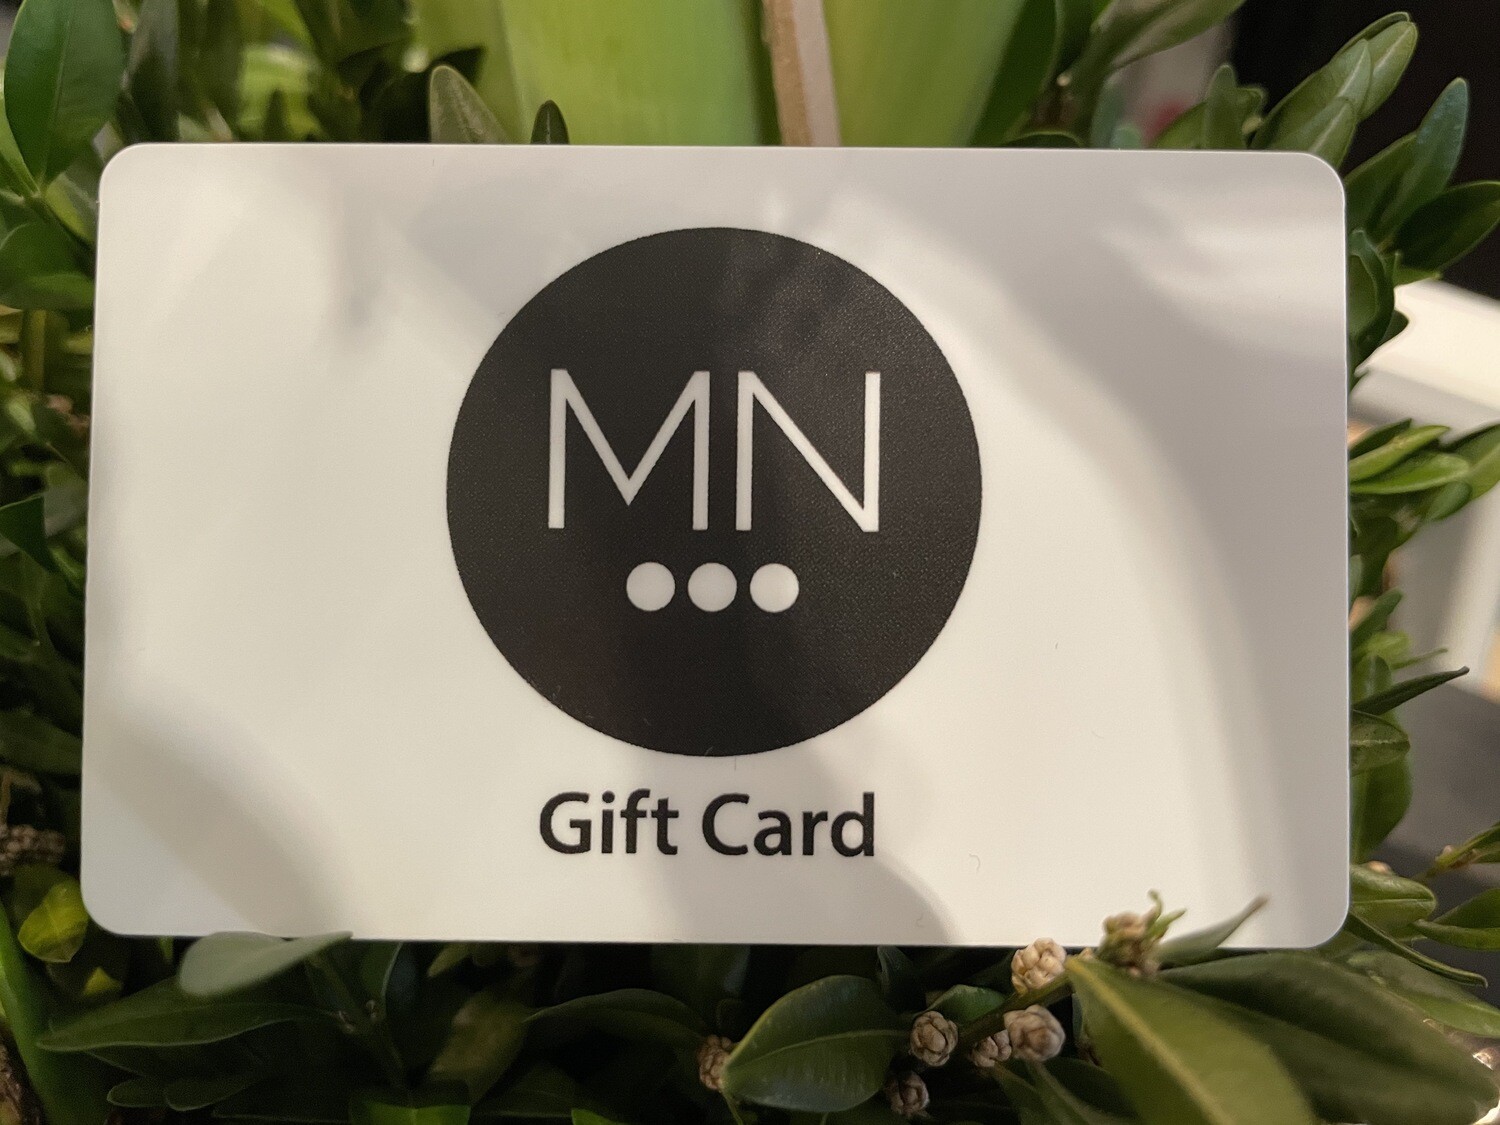 MN Digital Gift cards